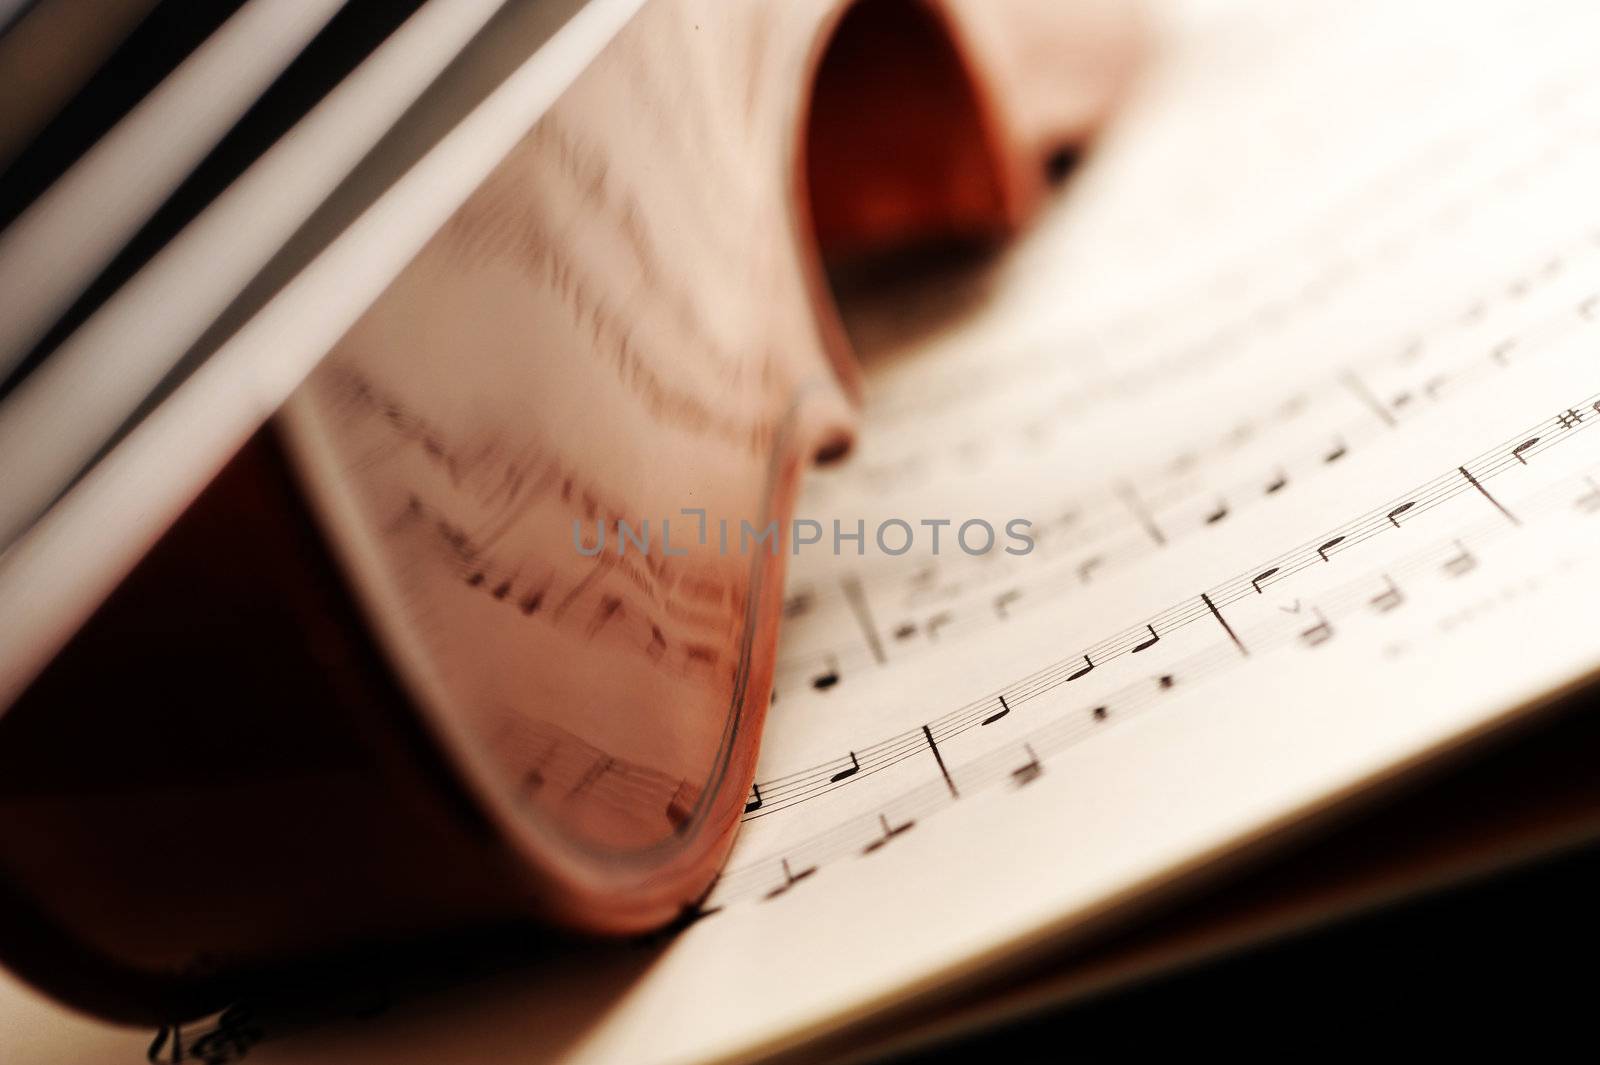  violin on a music sheet, shallow deep of field